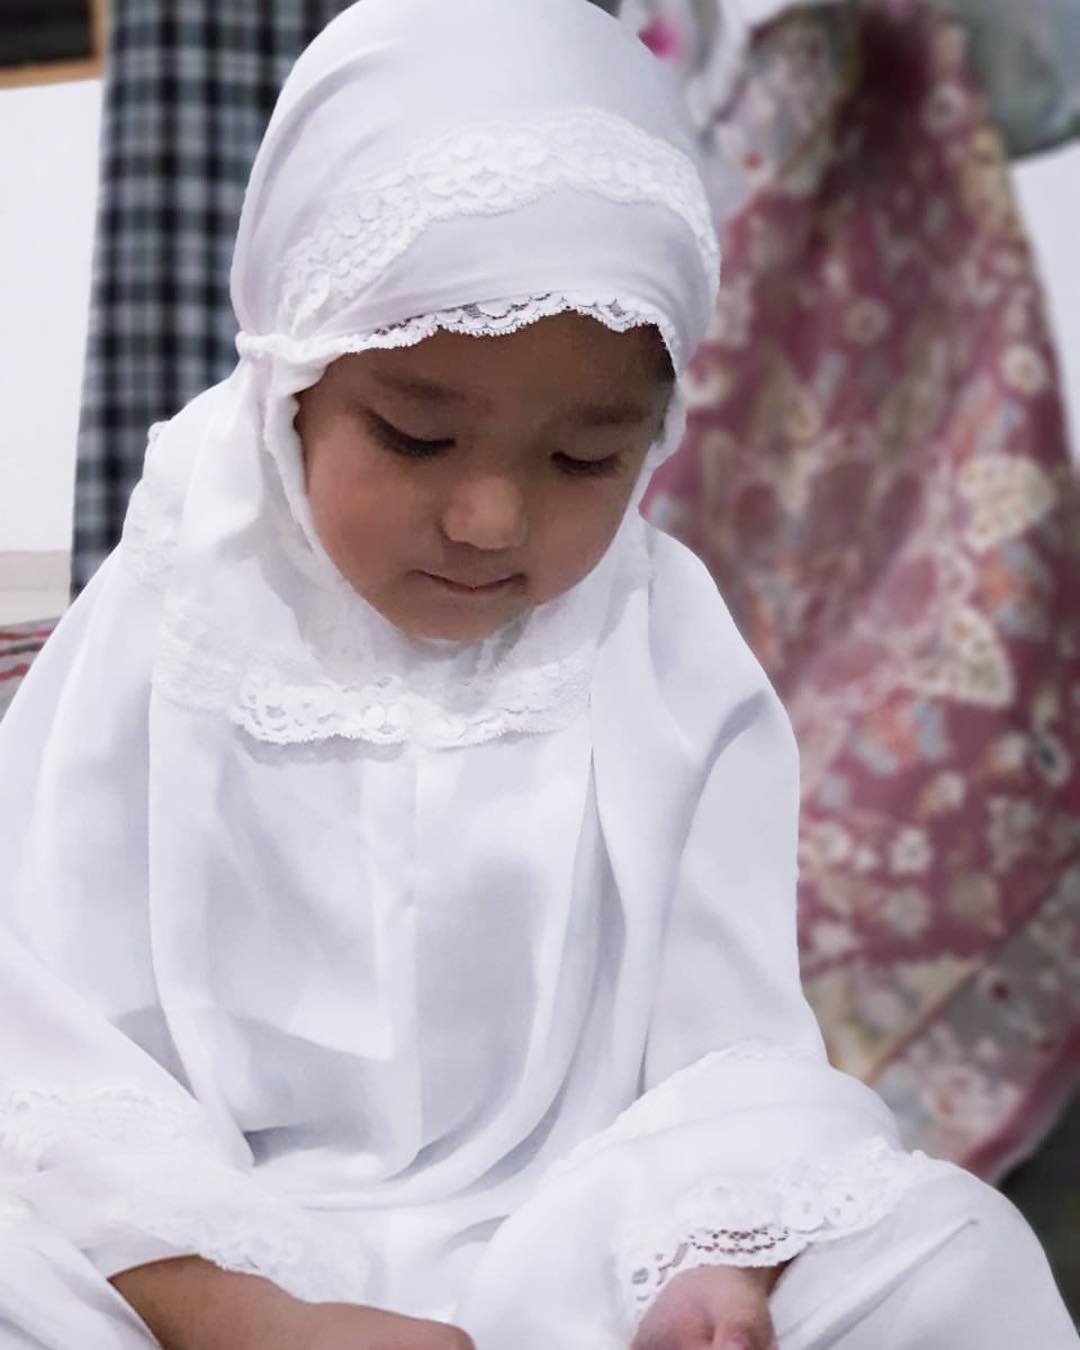 Download 7700 Koleksi Gambar Anak Kecil Lucu Pake Jilbab Terlucu